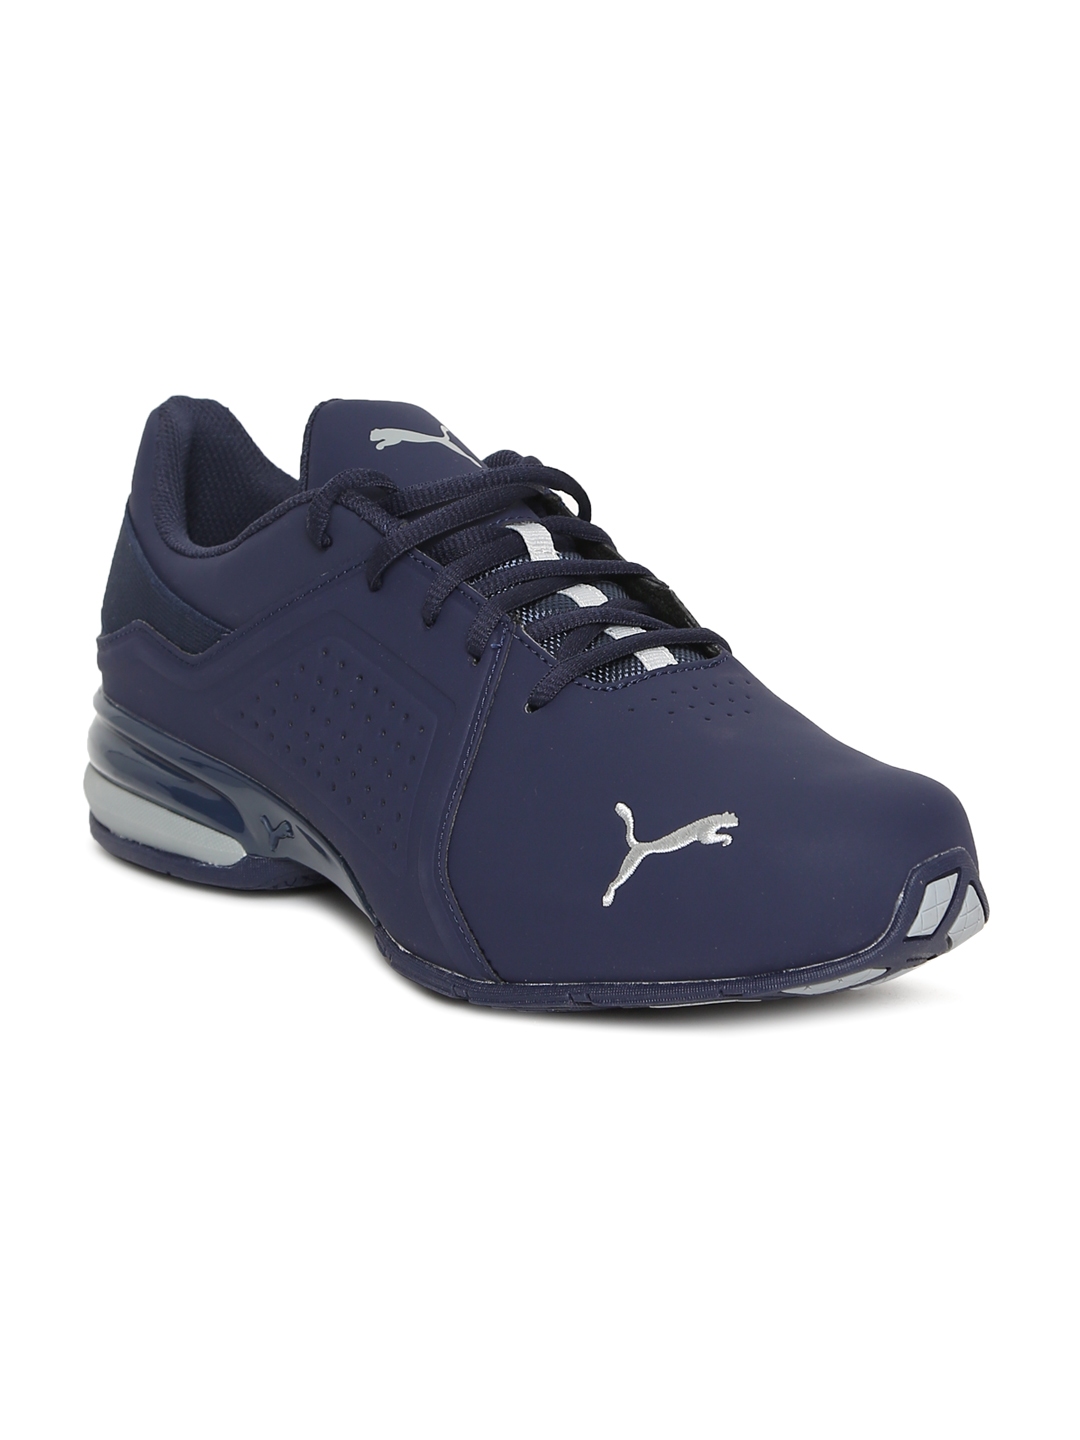 Buy Puma Men Viz Runner Running Shoes - Sports Shoes for Men 6703469 |  Myntra